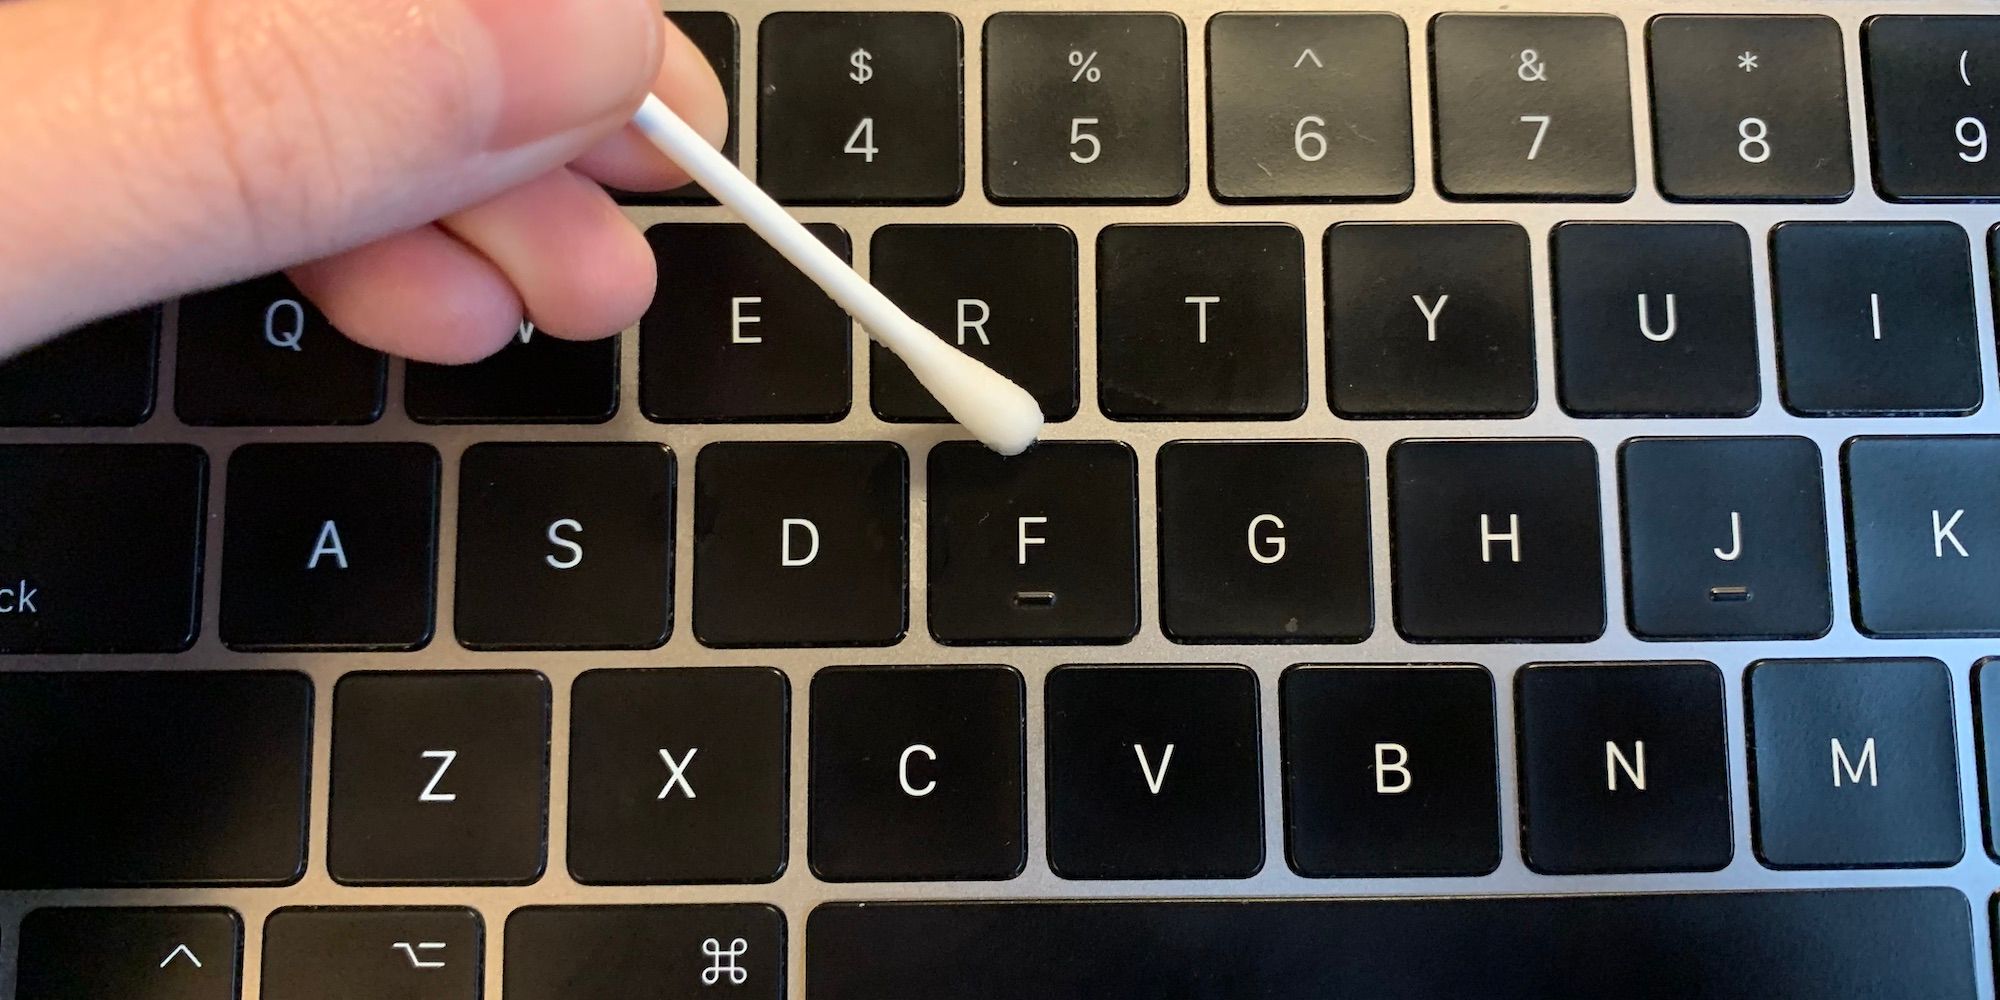 A hand holding a cotton swab wiping inbetween keys on a macbook keyboard